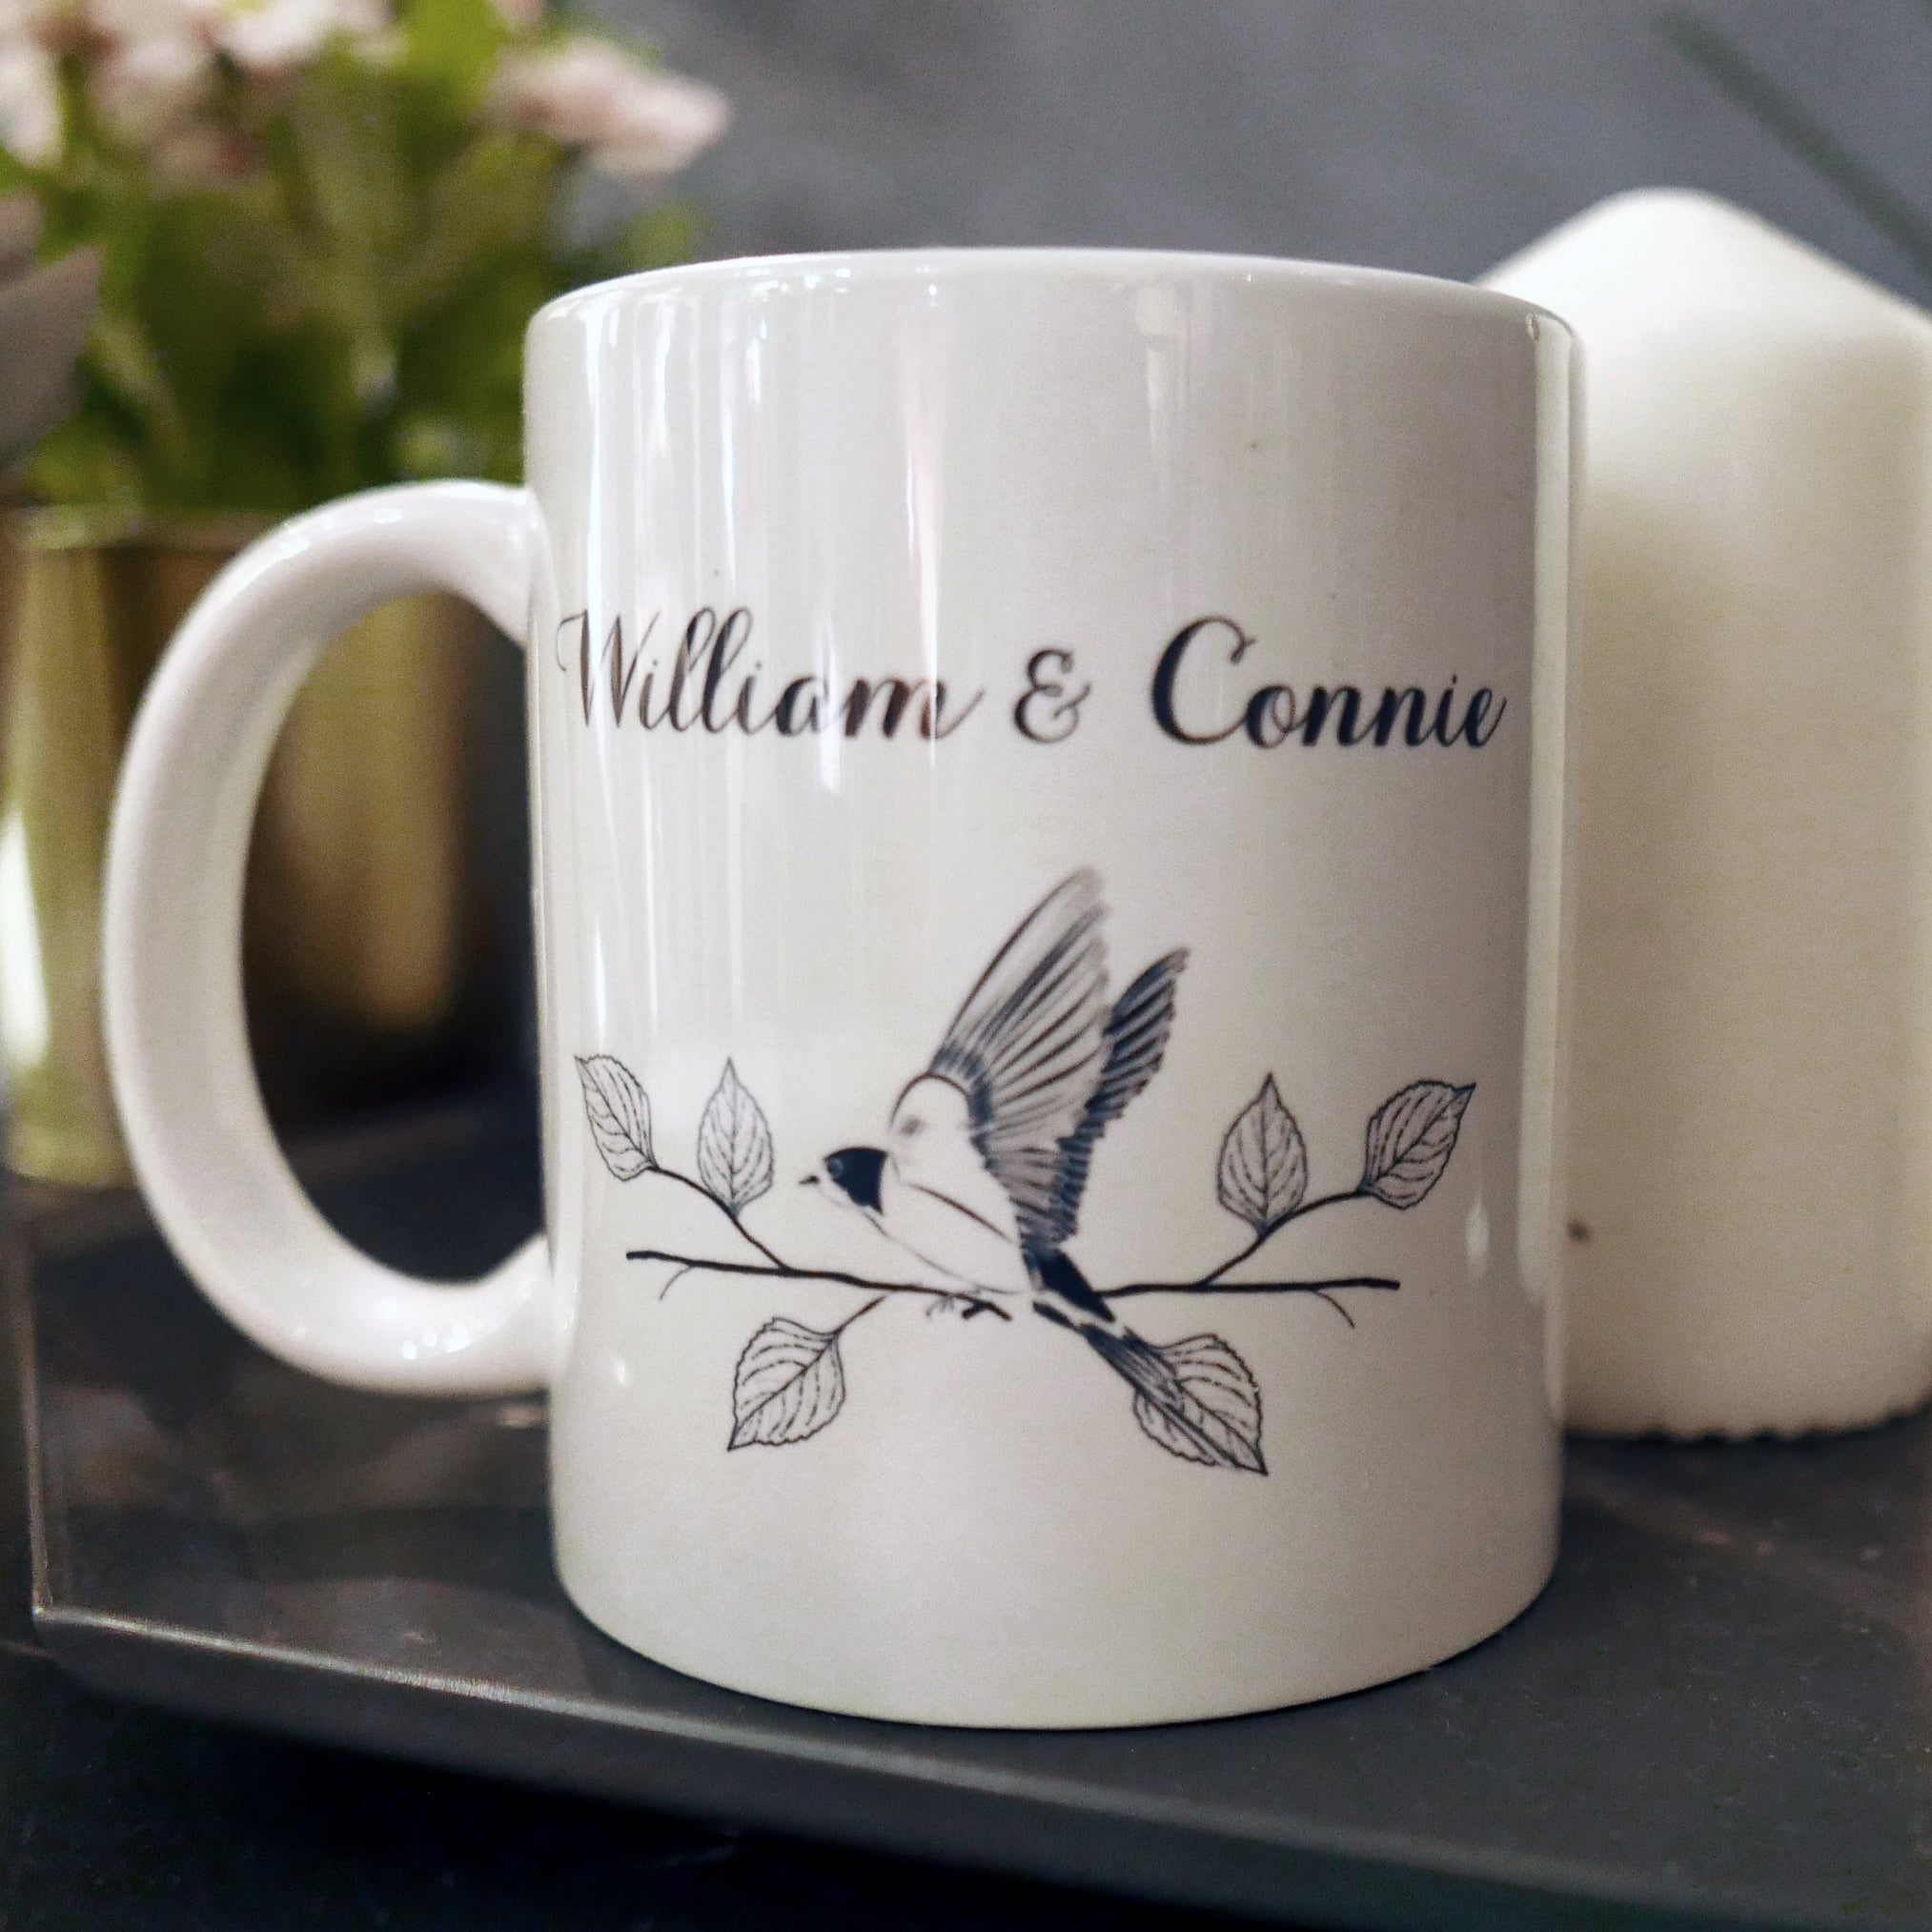 客製化陶瓷杯 Customize Mug